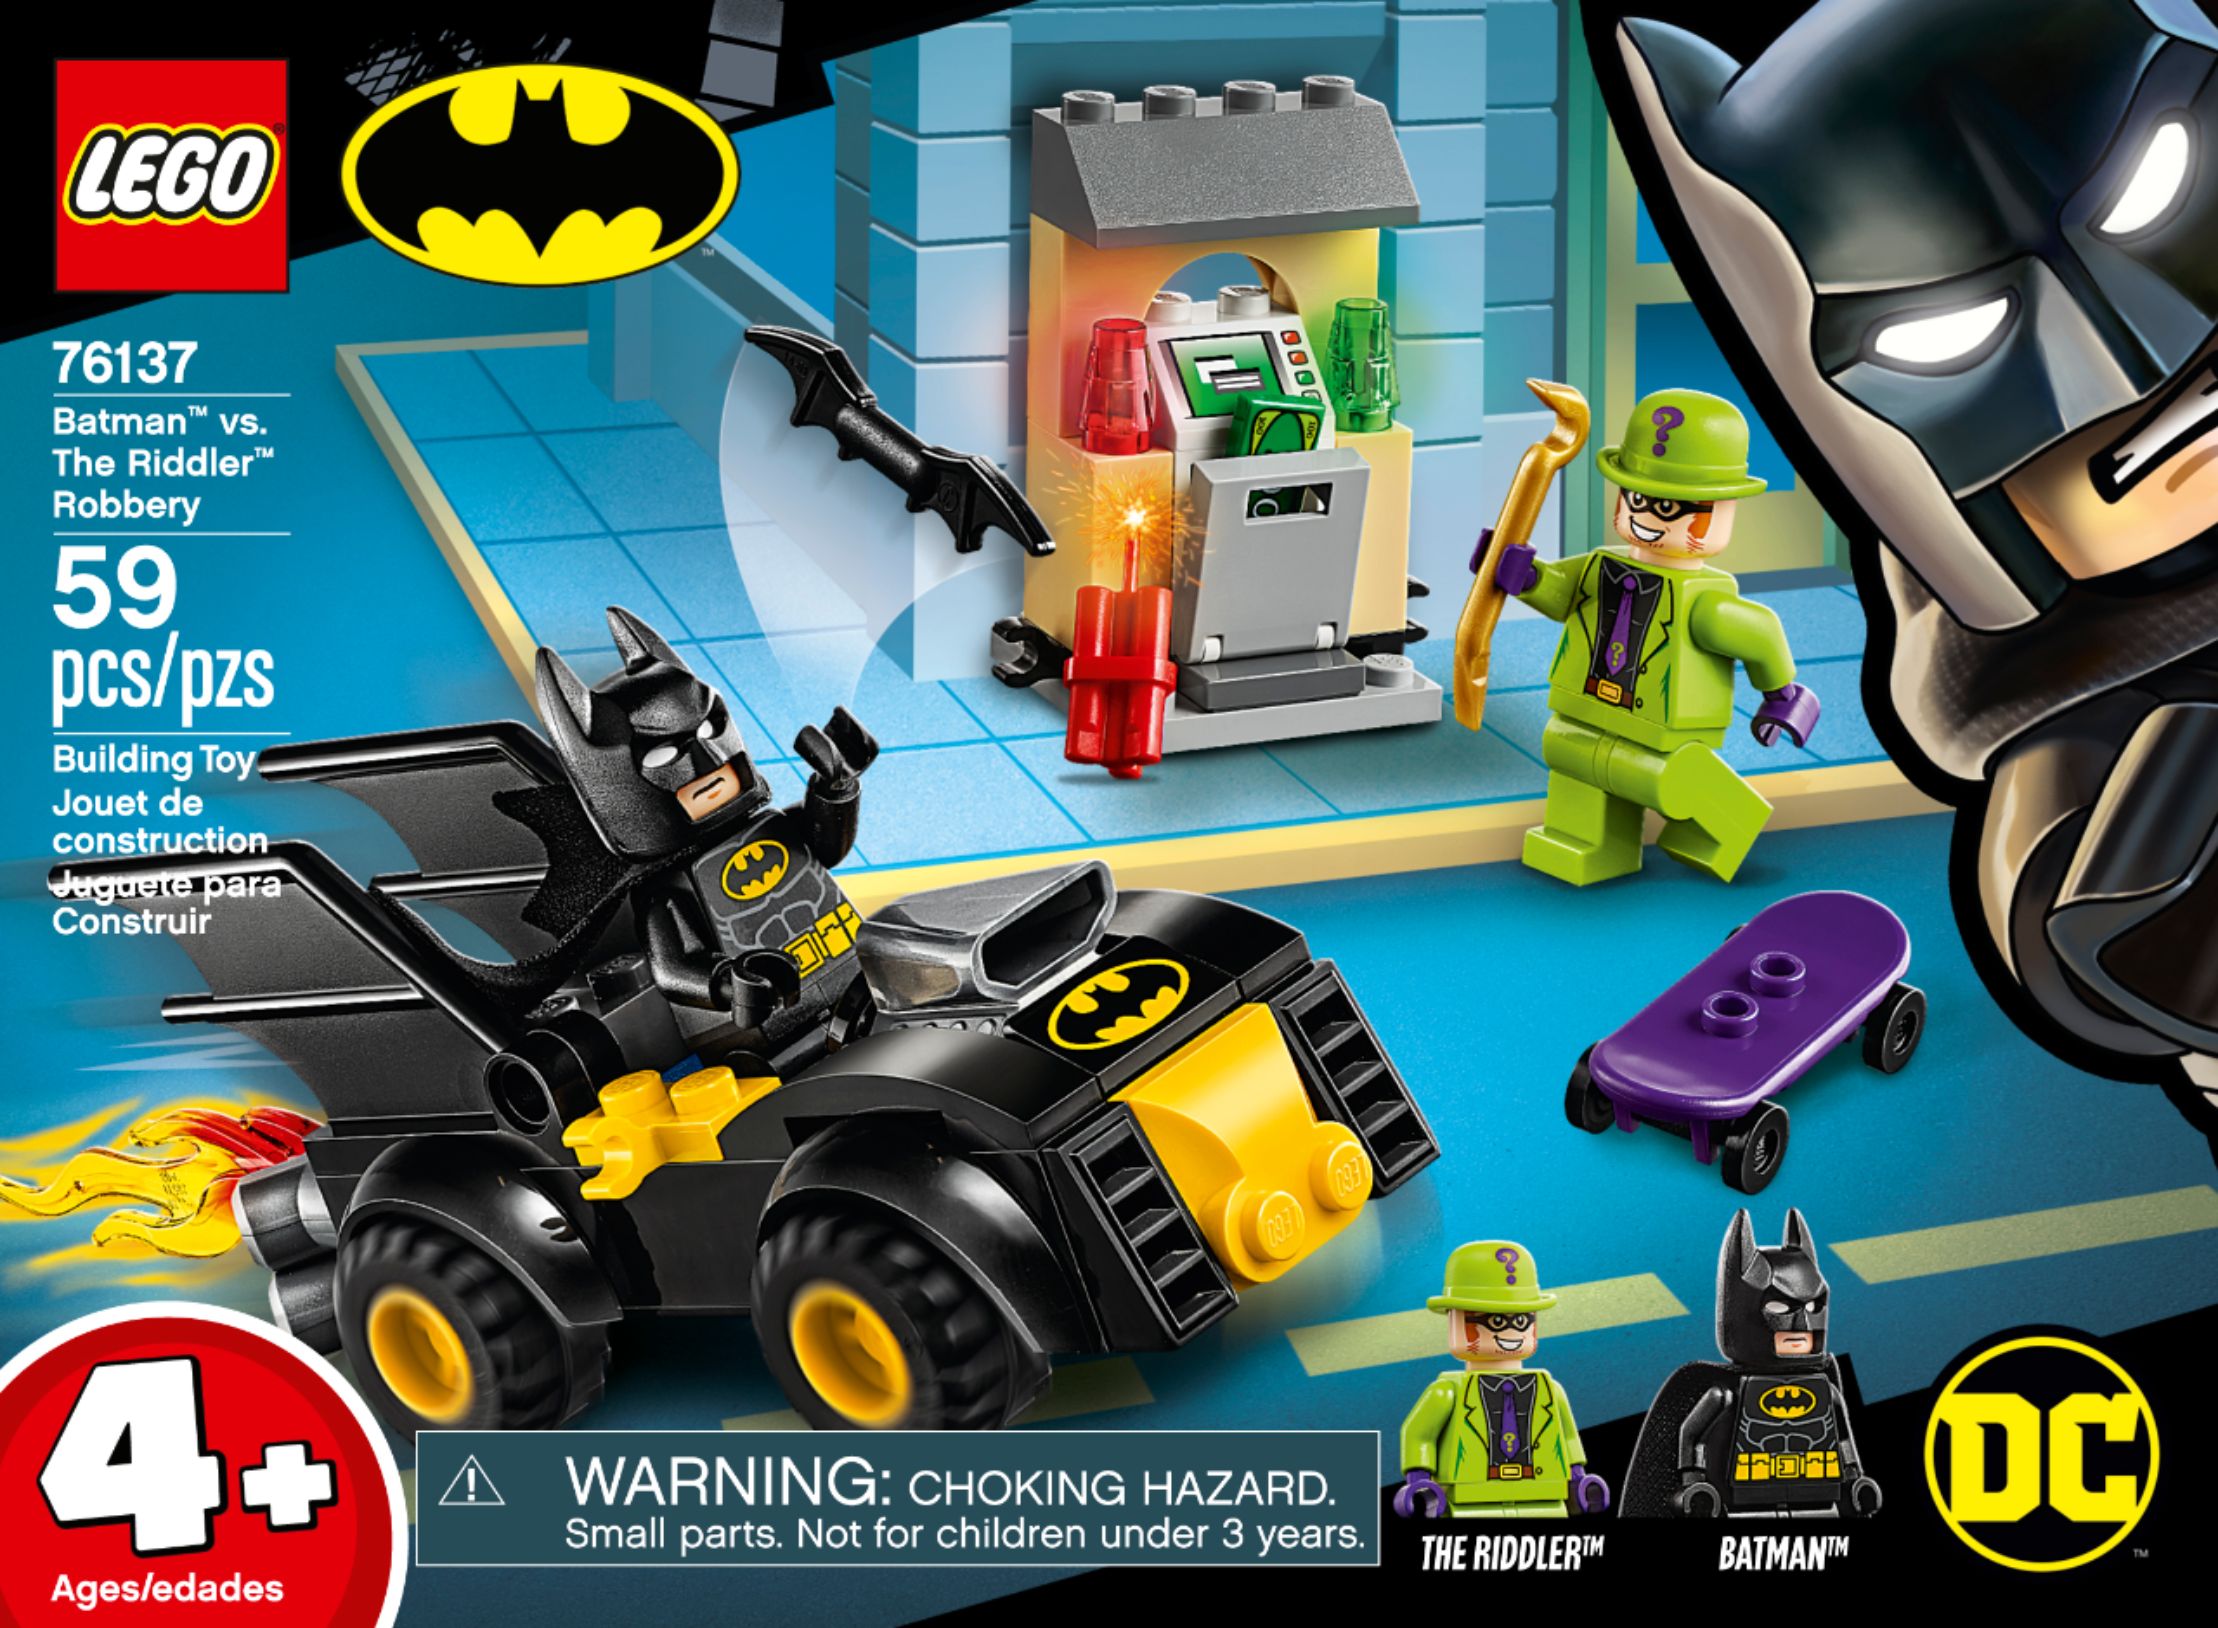 Best Buy: LEGO DC Super Heroes Batman vs. The Riddler Robbery 